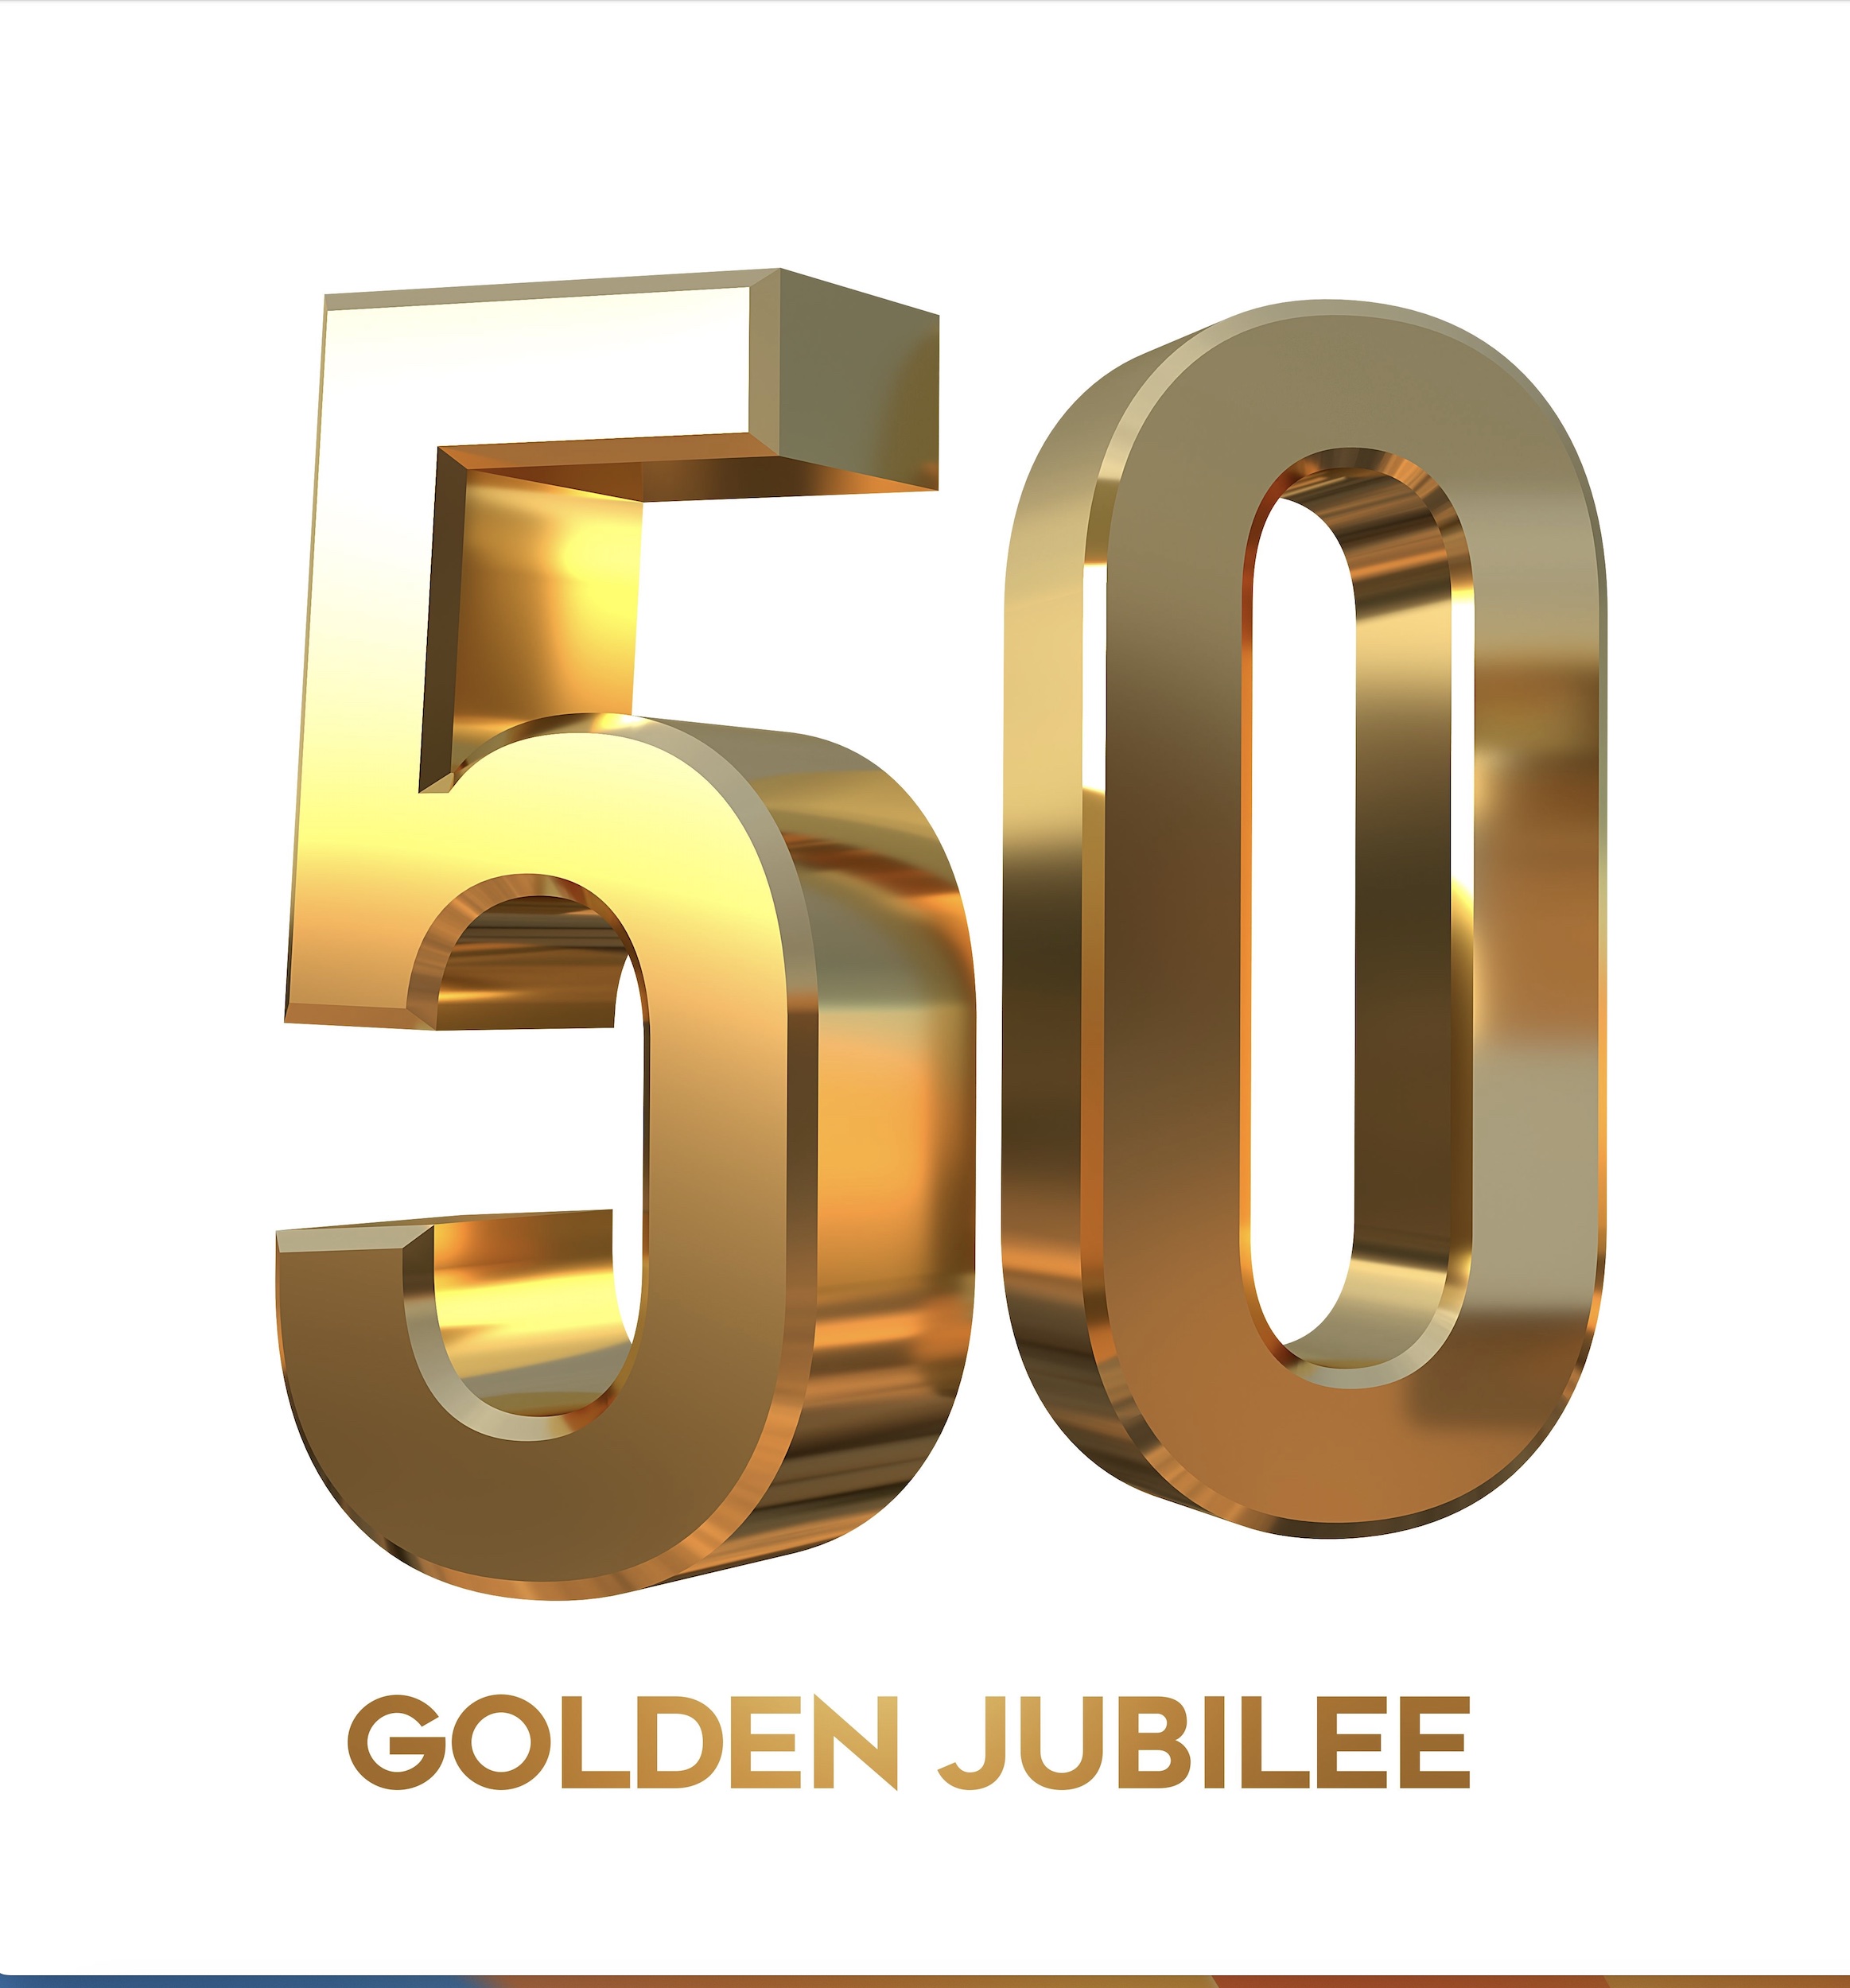 golden jubilee celebration